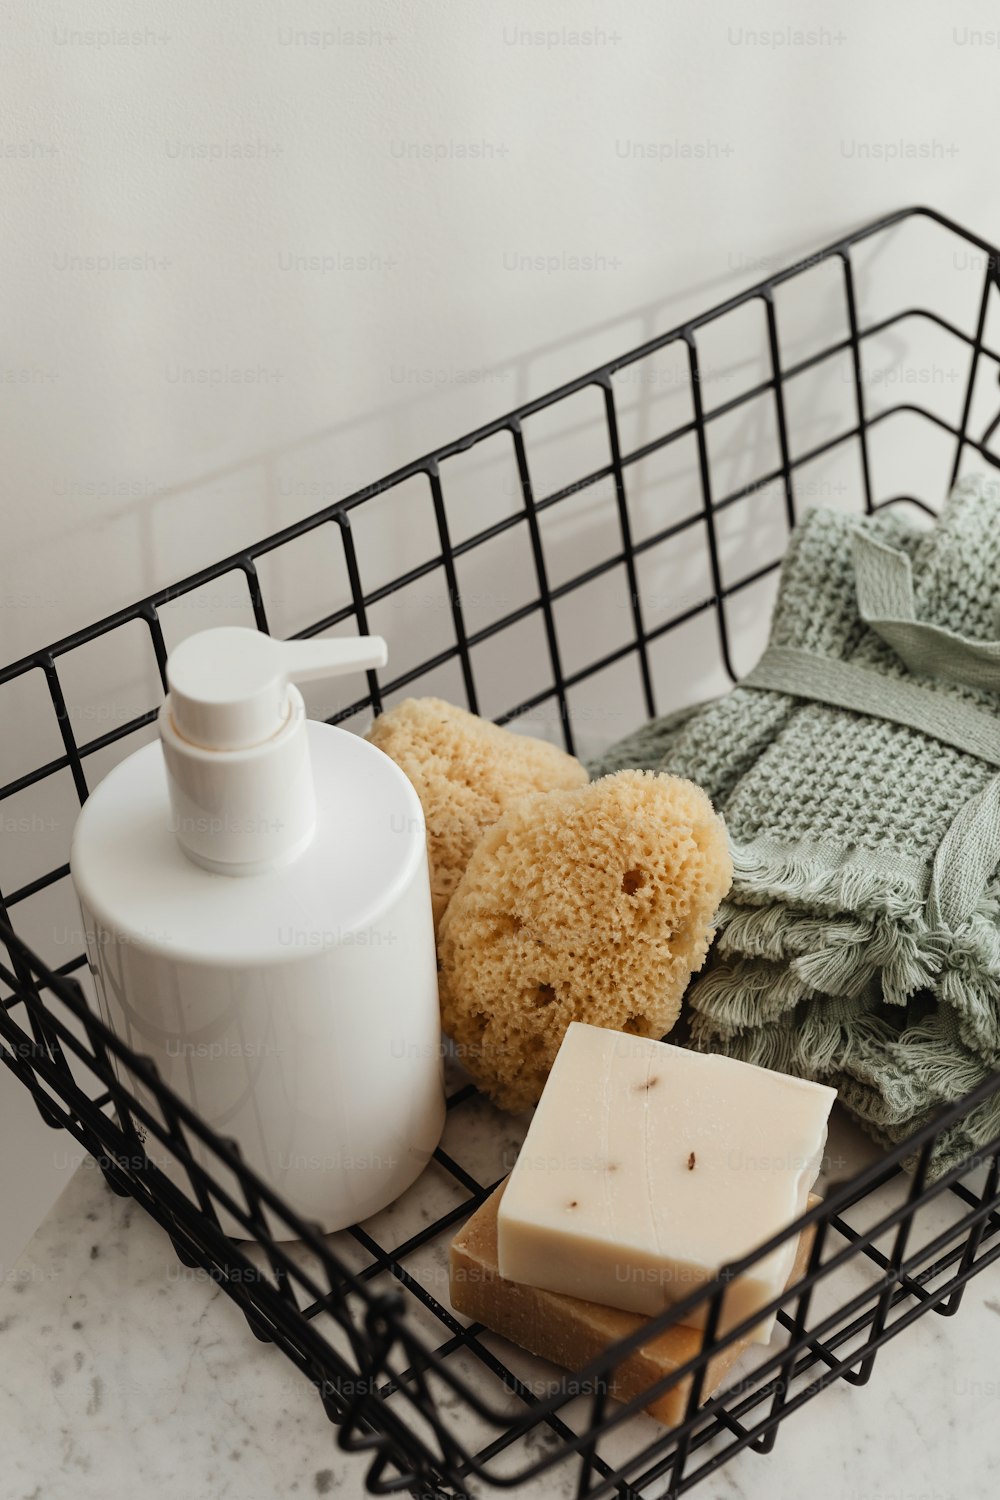 a basket with soap, a soap bar, and a teddy bear